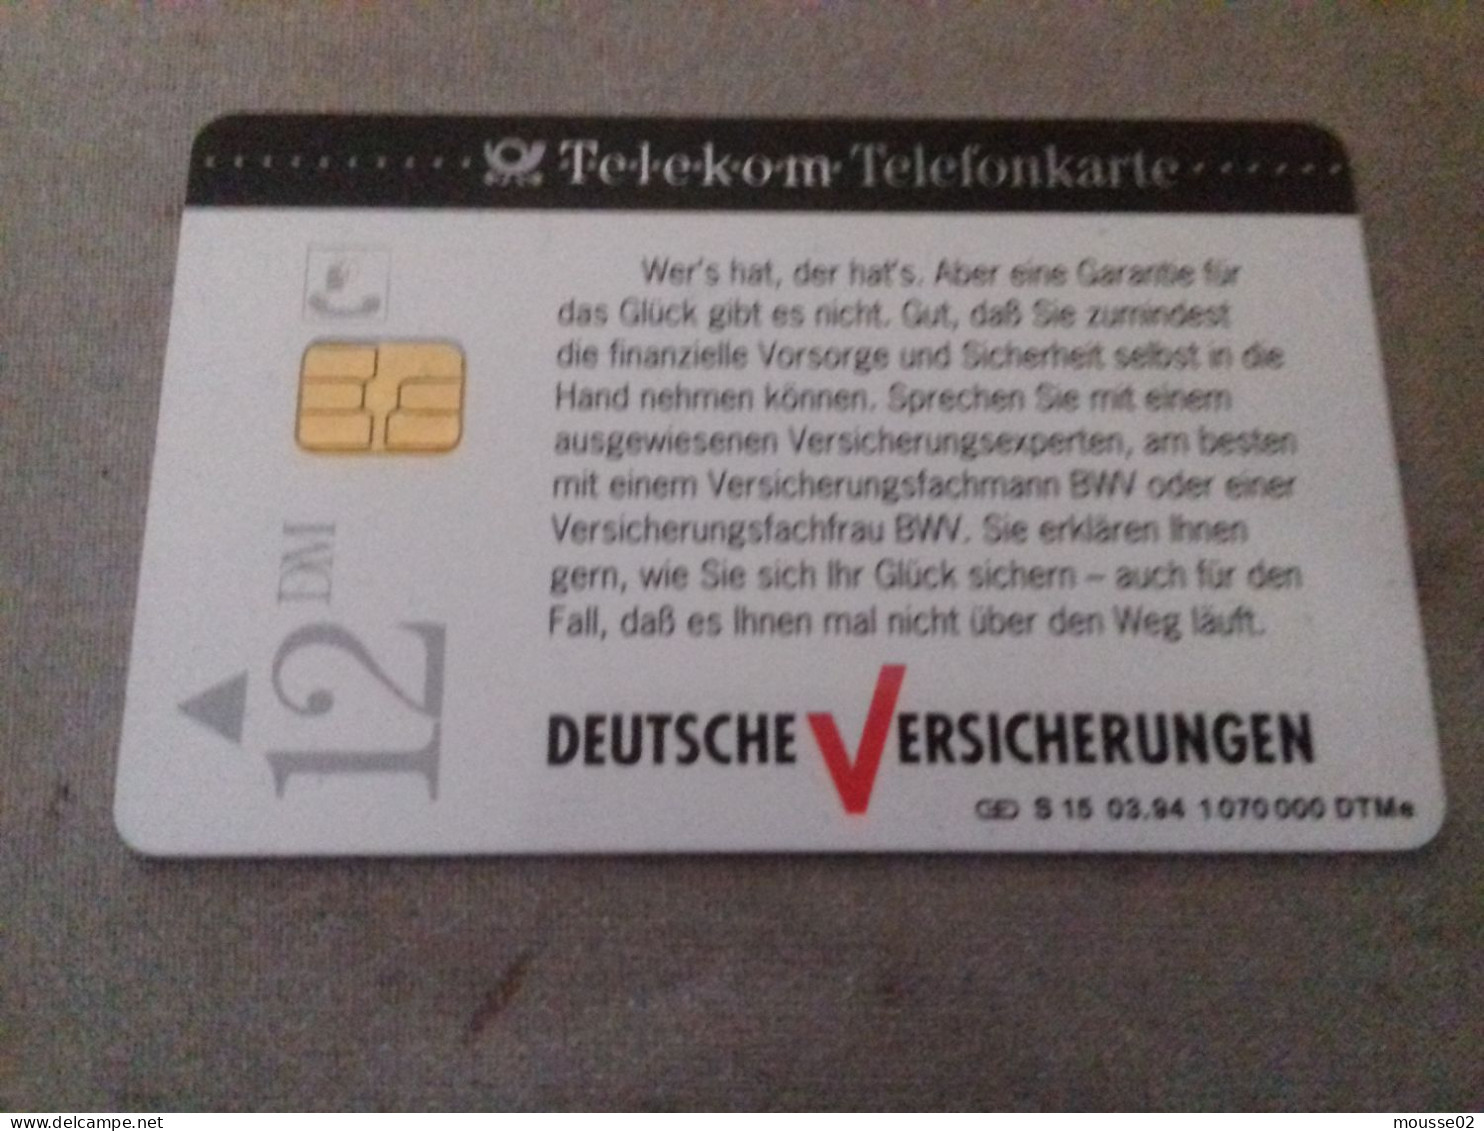 TELECARTE ALLEMANDE - A + AD-Series : Werbekarten Der Dt. Telekom AG